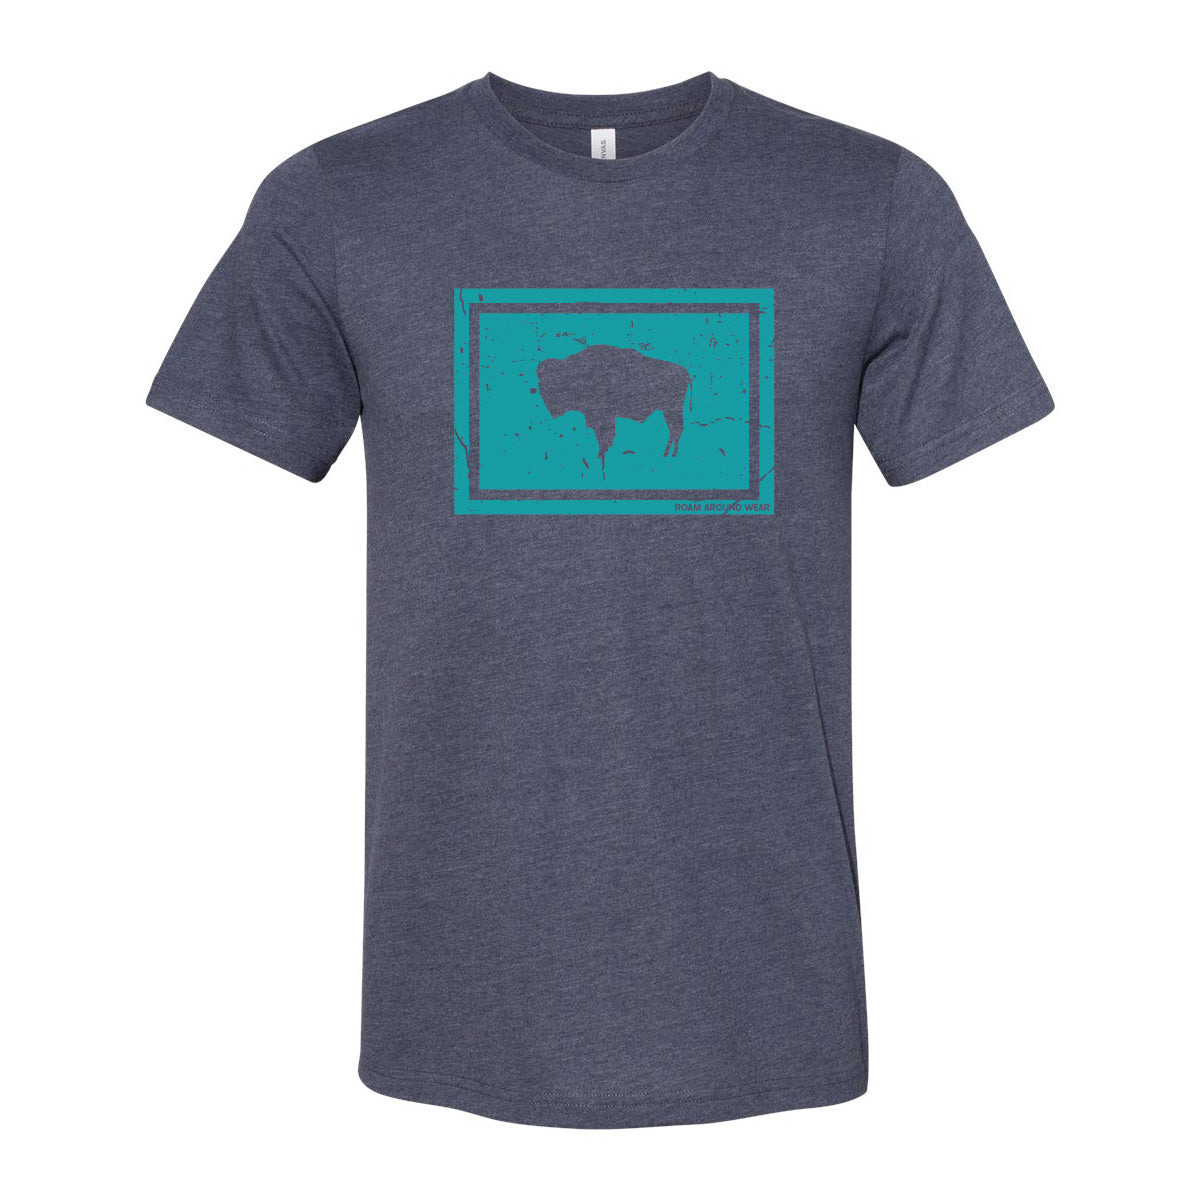 Wyoming Tee Shirt - Bison Tee Shirt - Buffalo Tee Shirt - Roam Around Wear is a Wyoming t-shirt company based in Gillette, Wyoming.